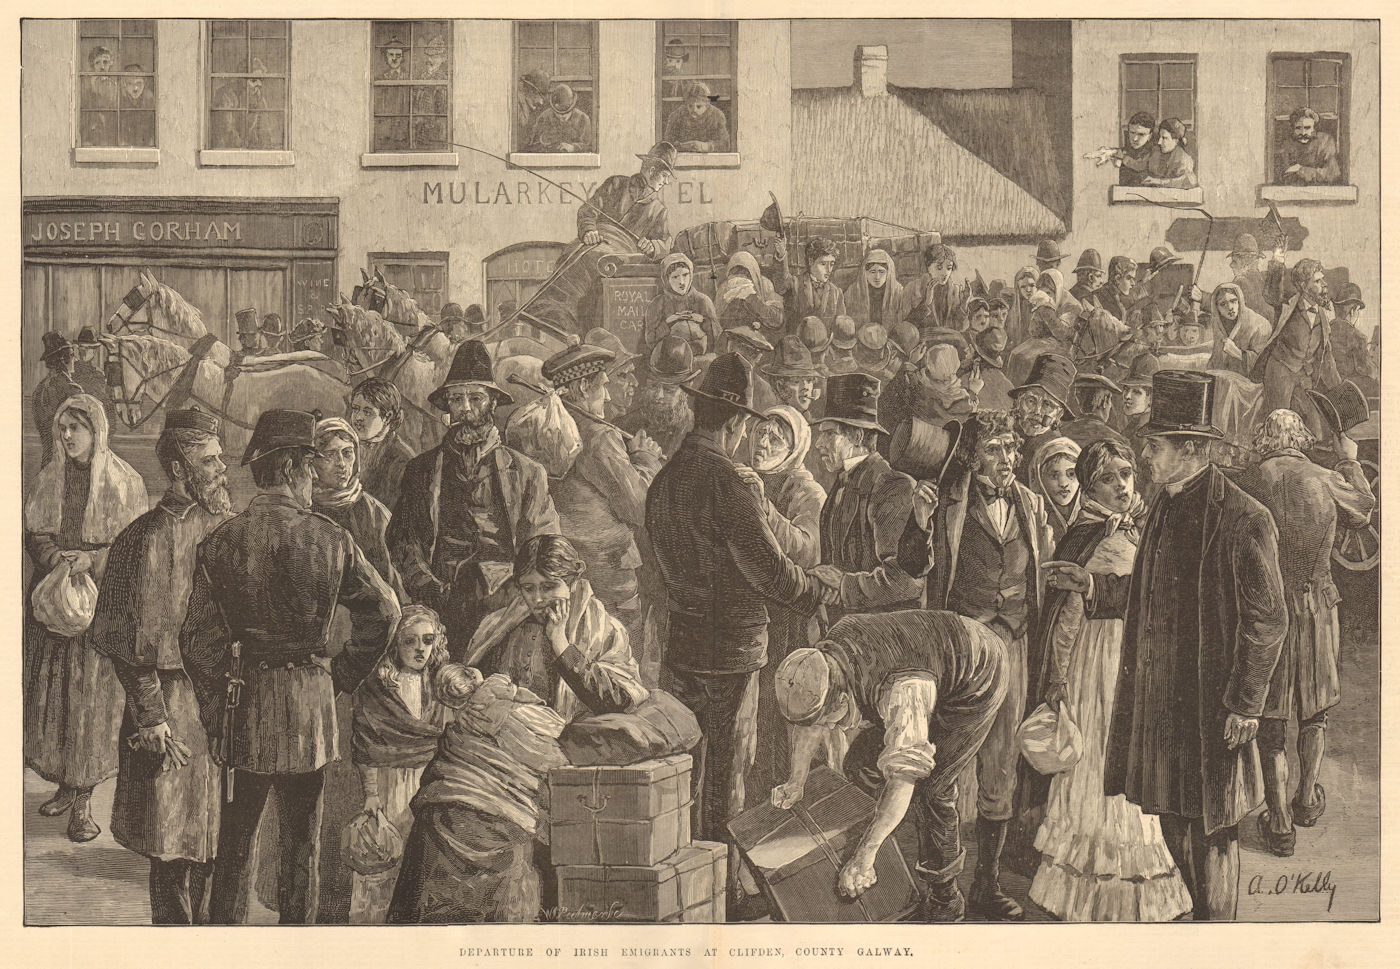 Departure of the Irish emigrants at Clifden, County Galway. Ireland 1883